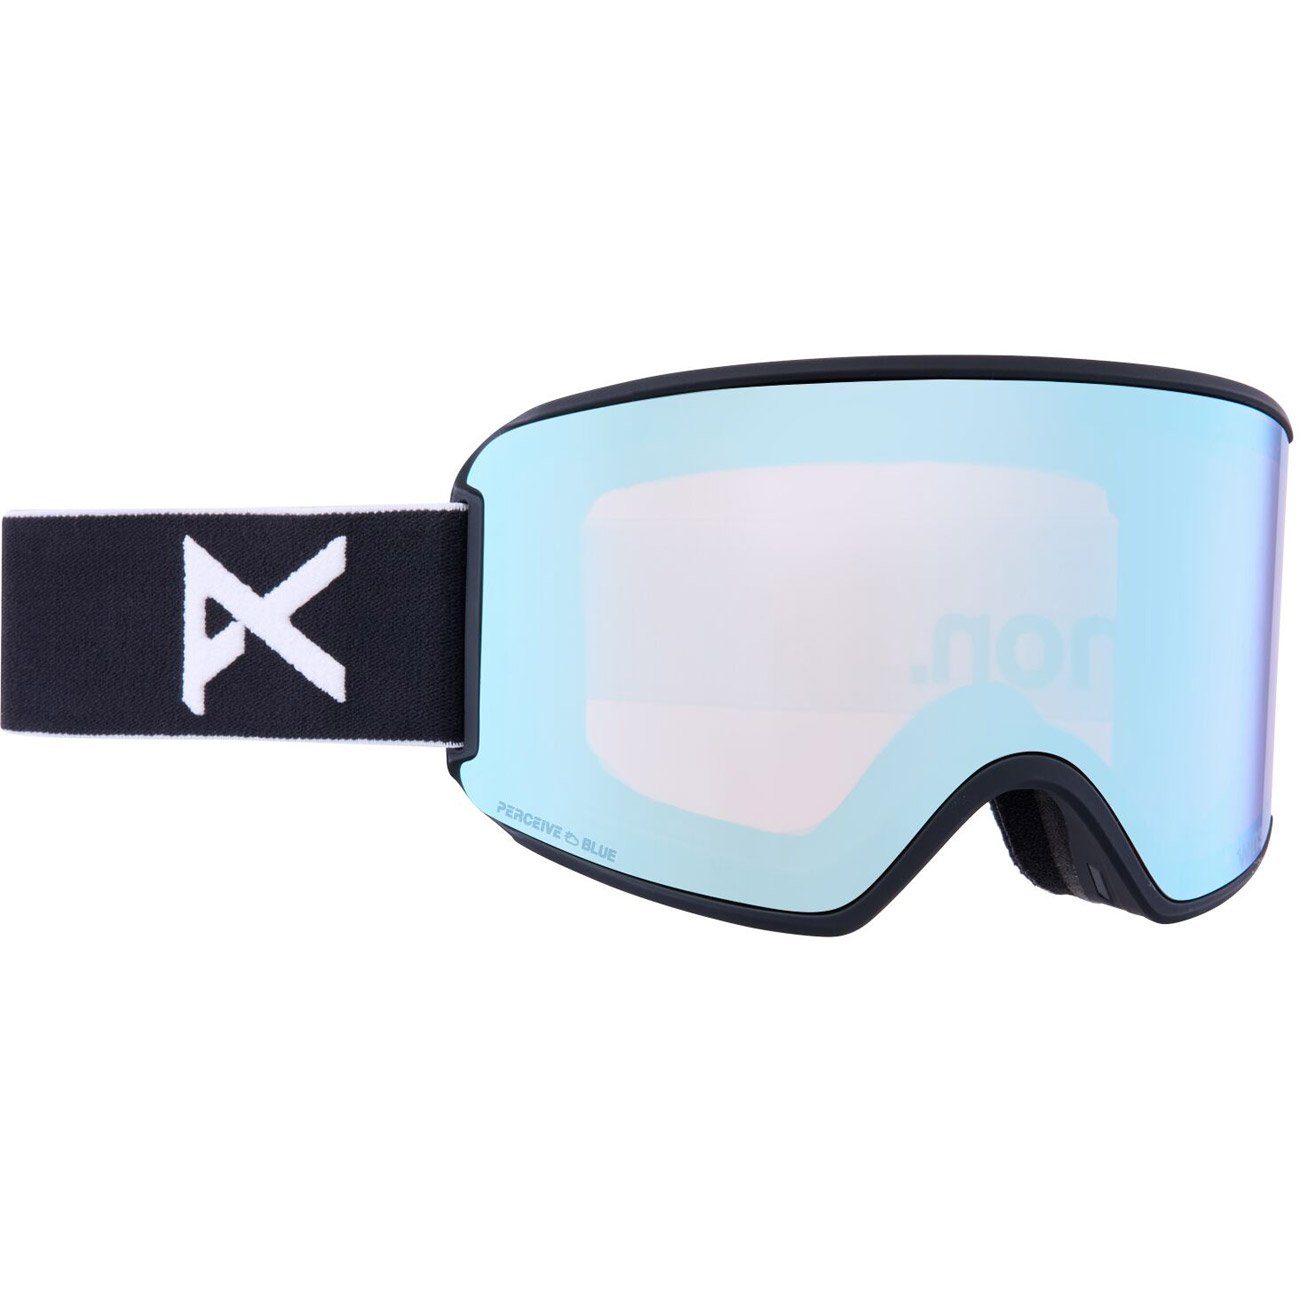 Anon LINSE Snowboardbrille, WM3 blue MFI black/prcv vrbl + BONUS